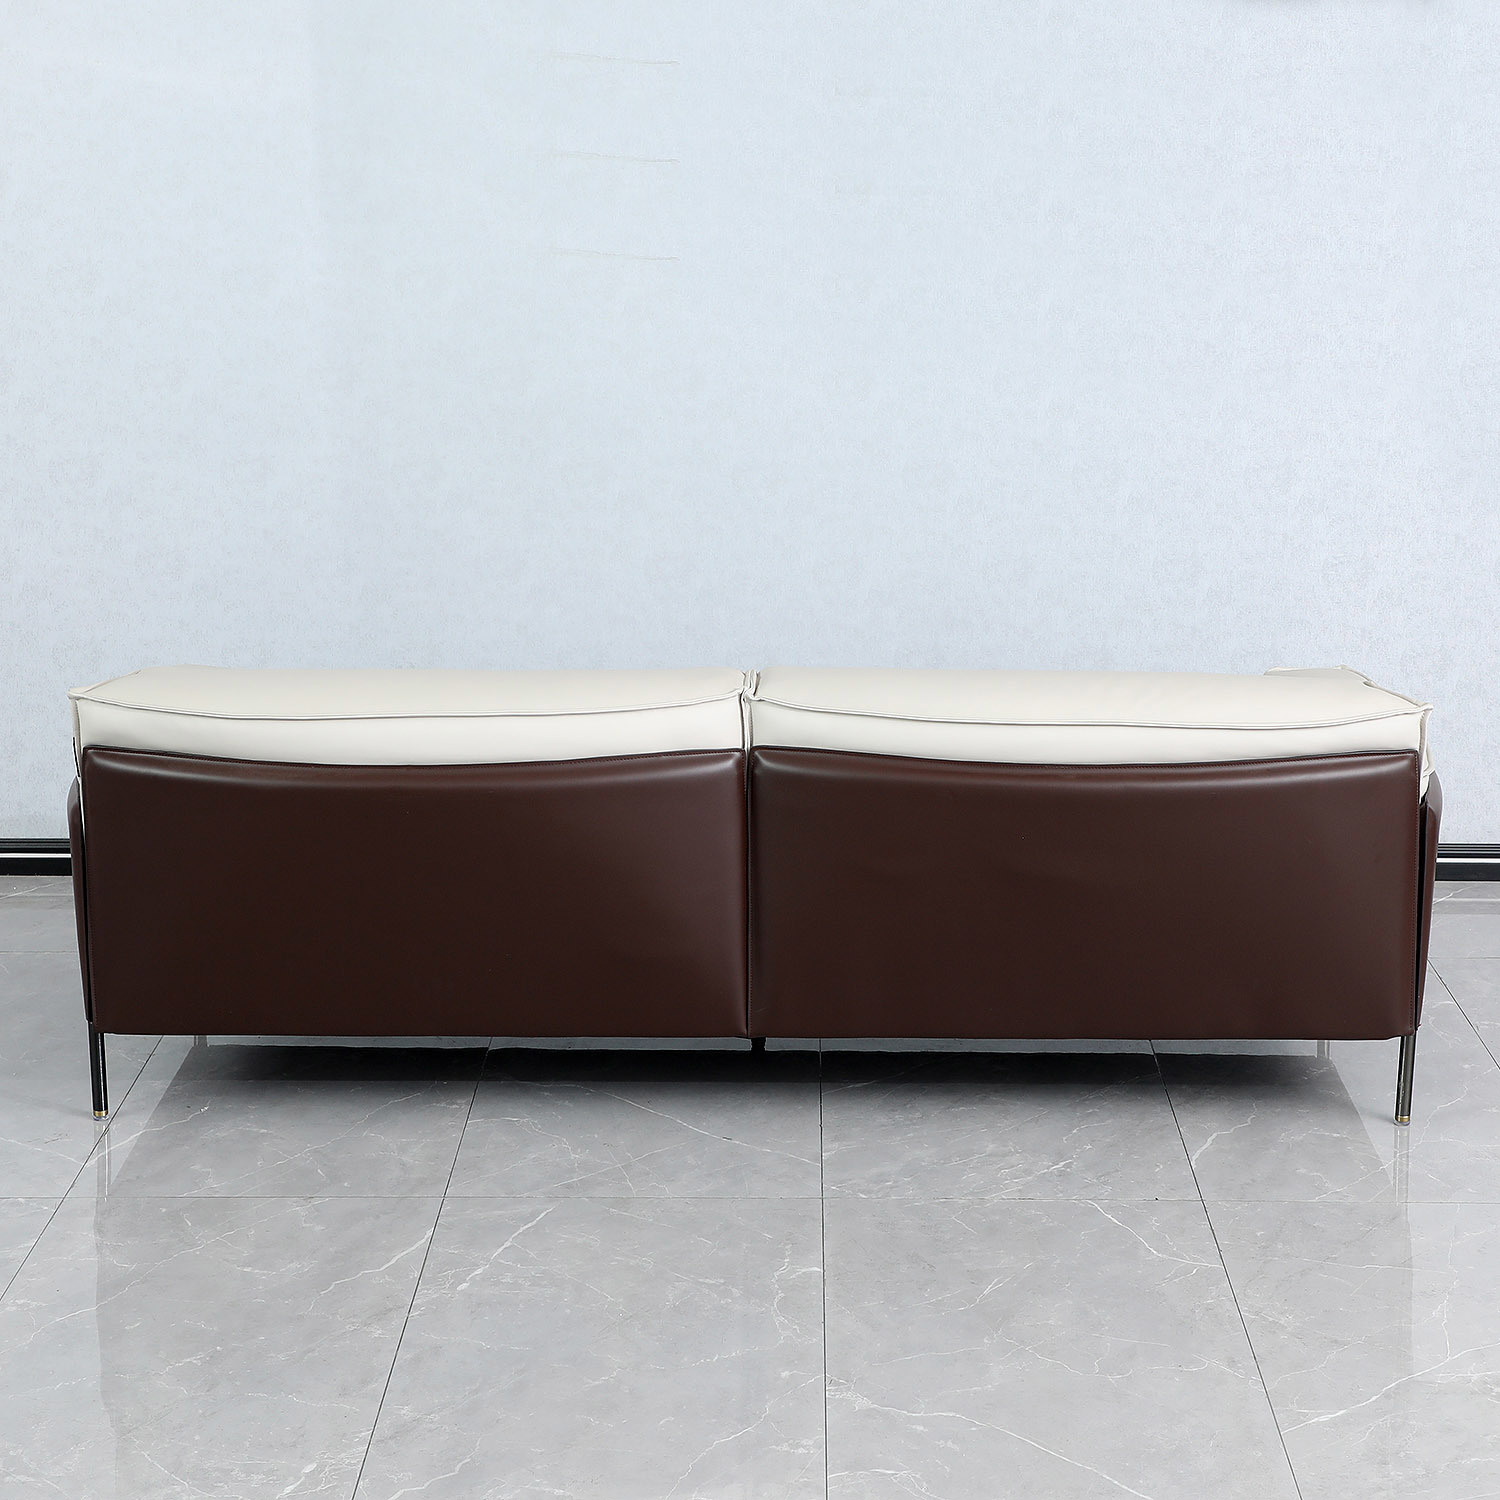 Classic New Club Leather Trend Sofa